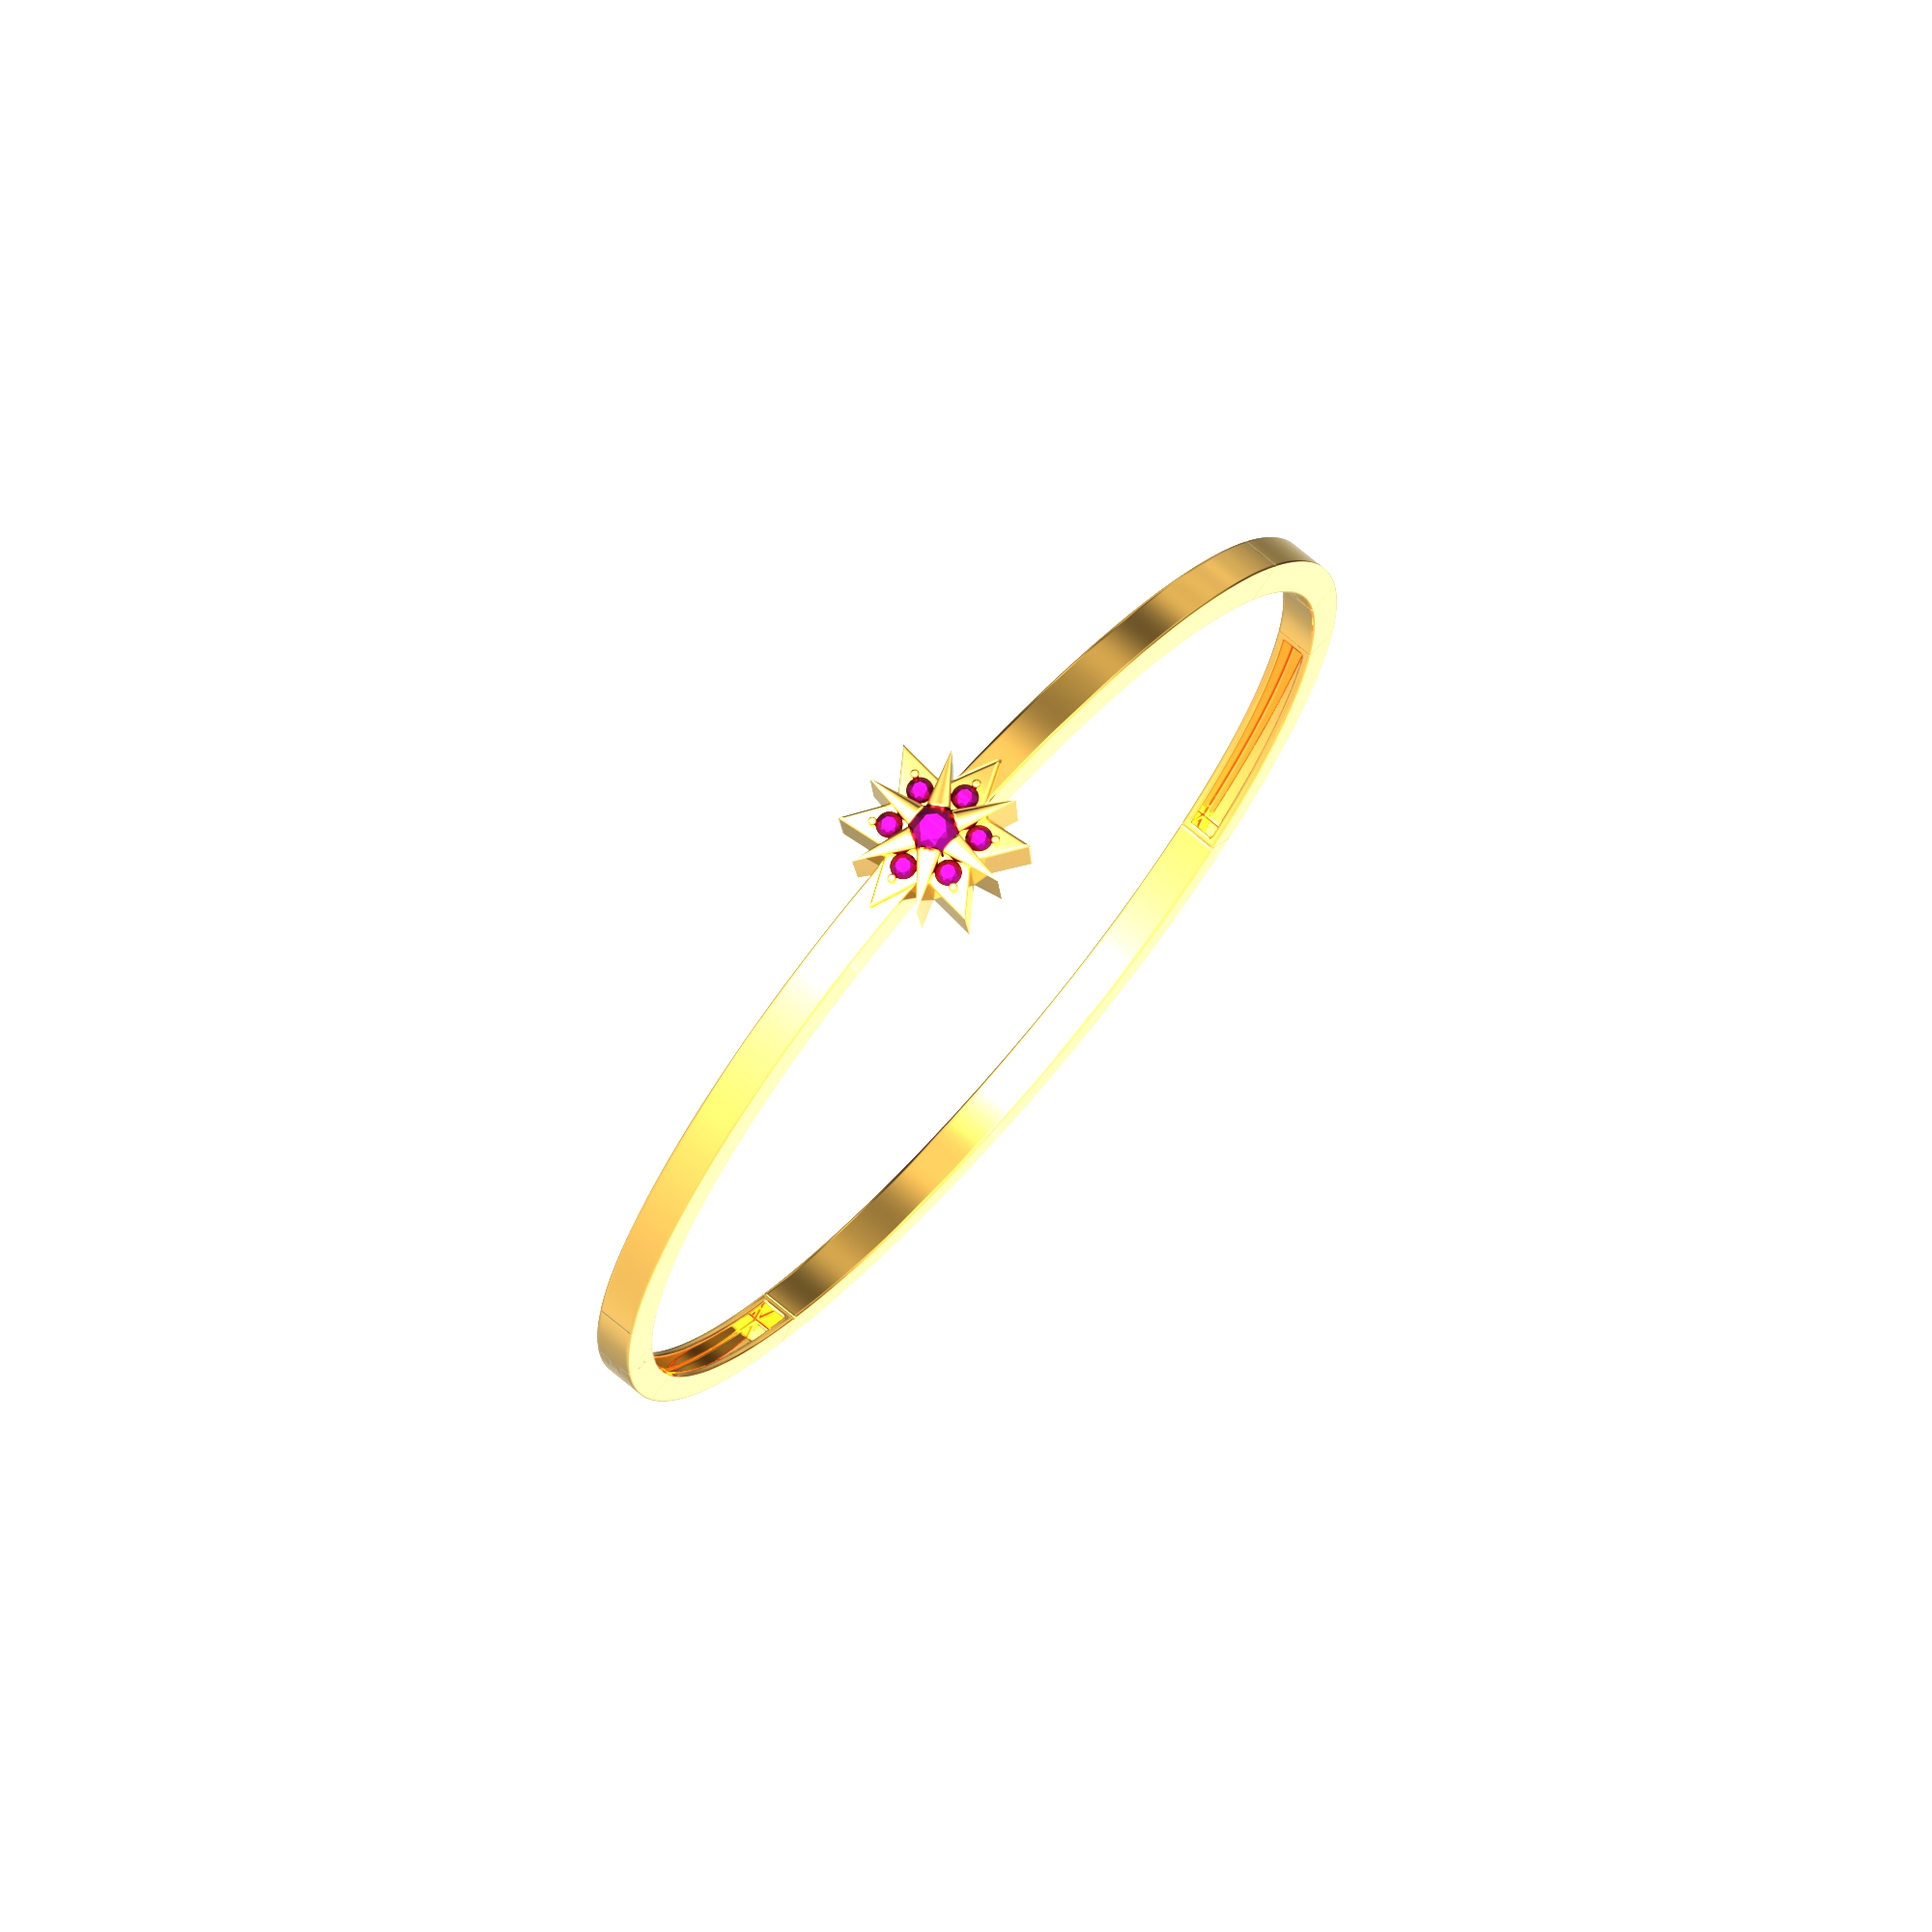 Bracelet with Single Flower Design